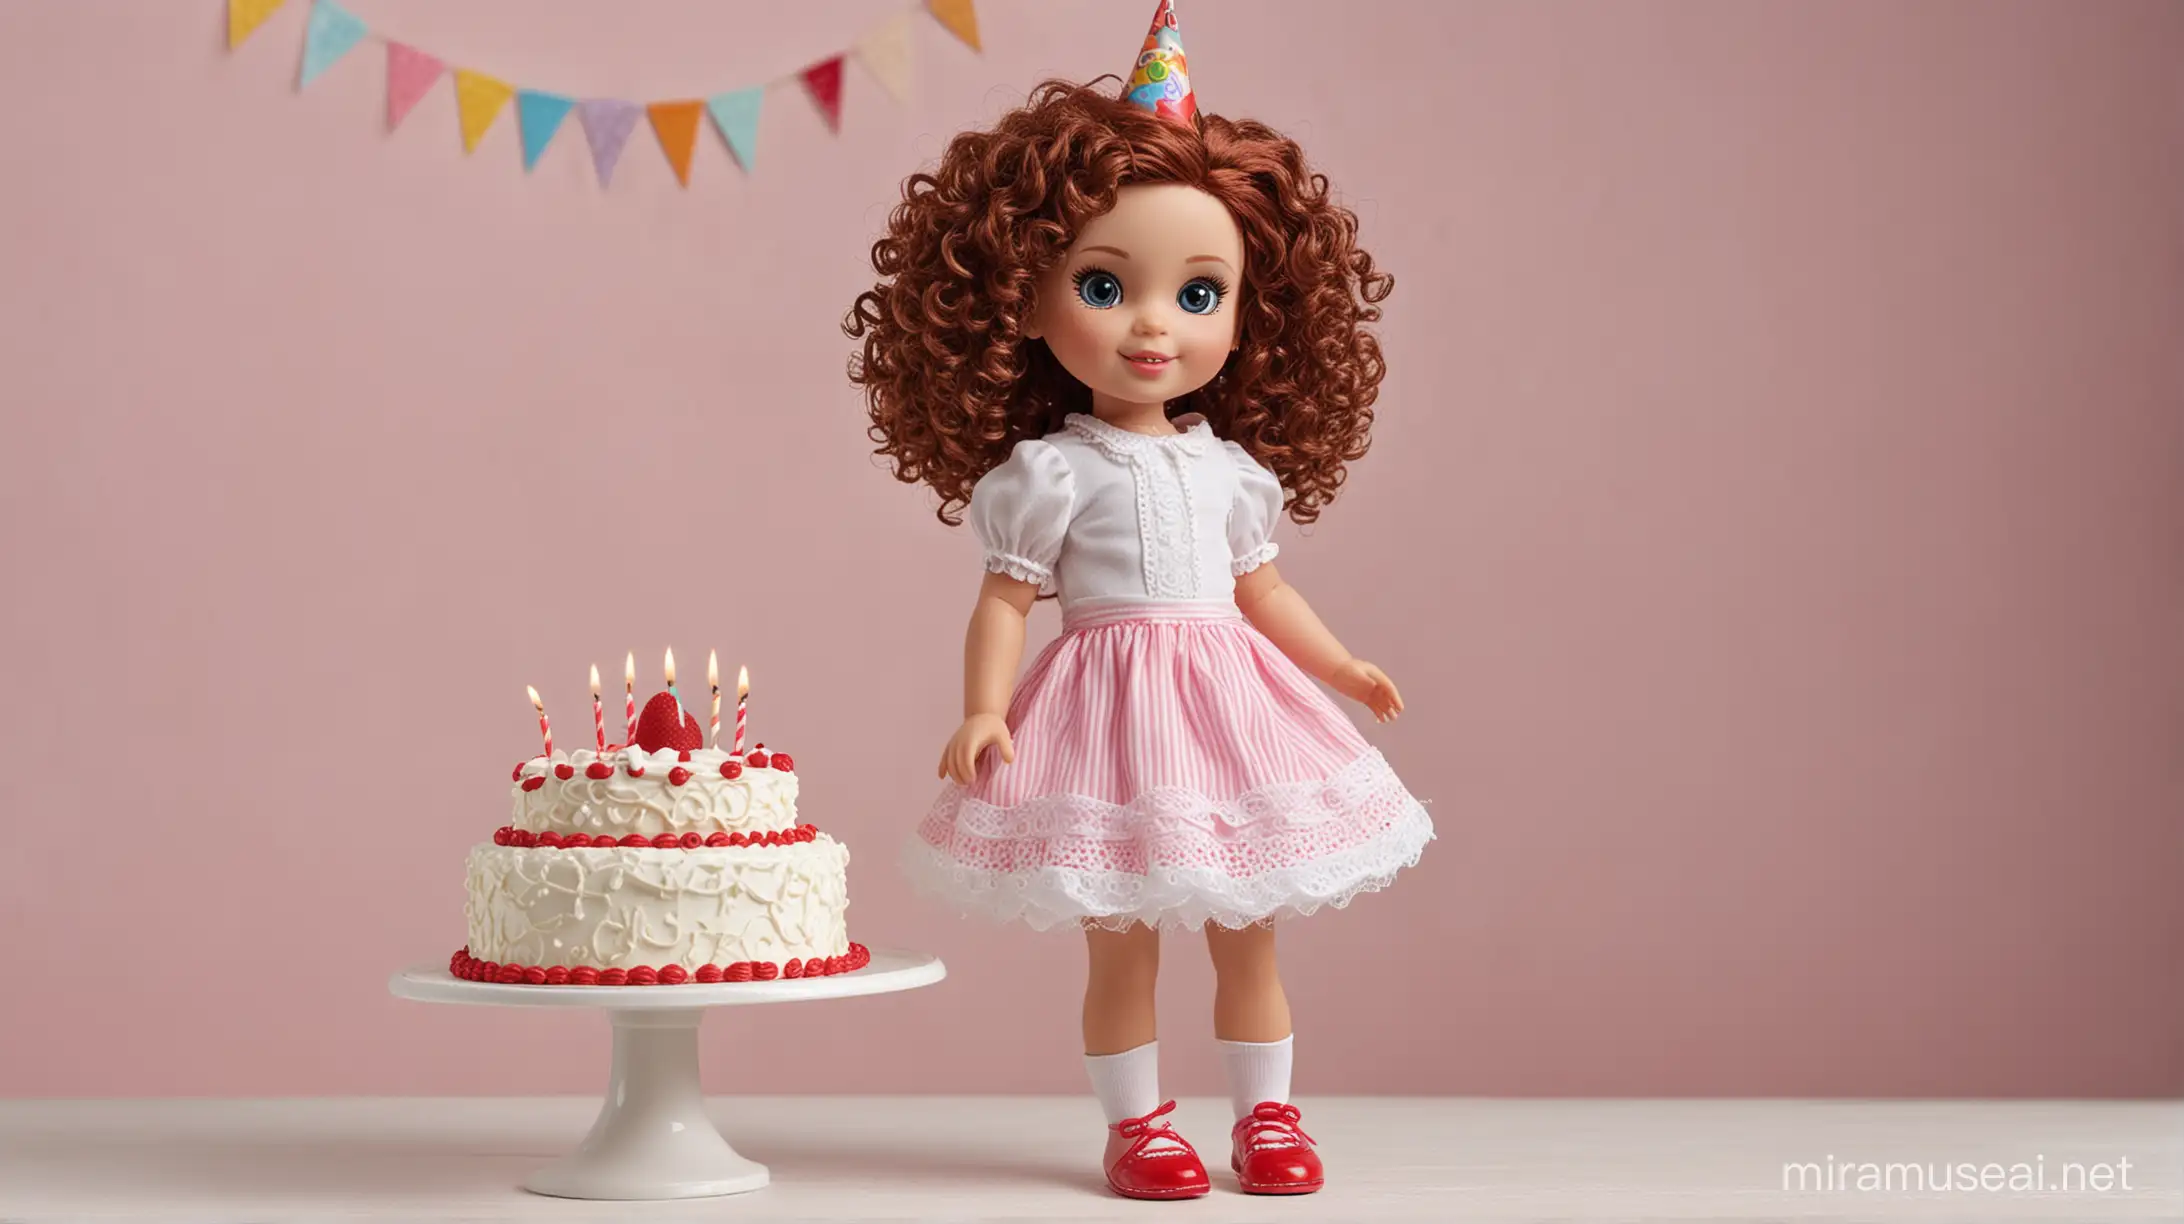 Joyful Doll with Curly Hair Holding Birthday Cake